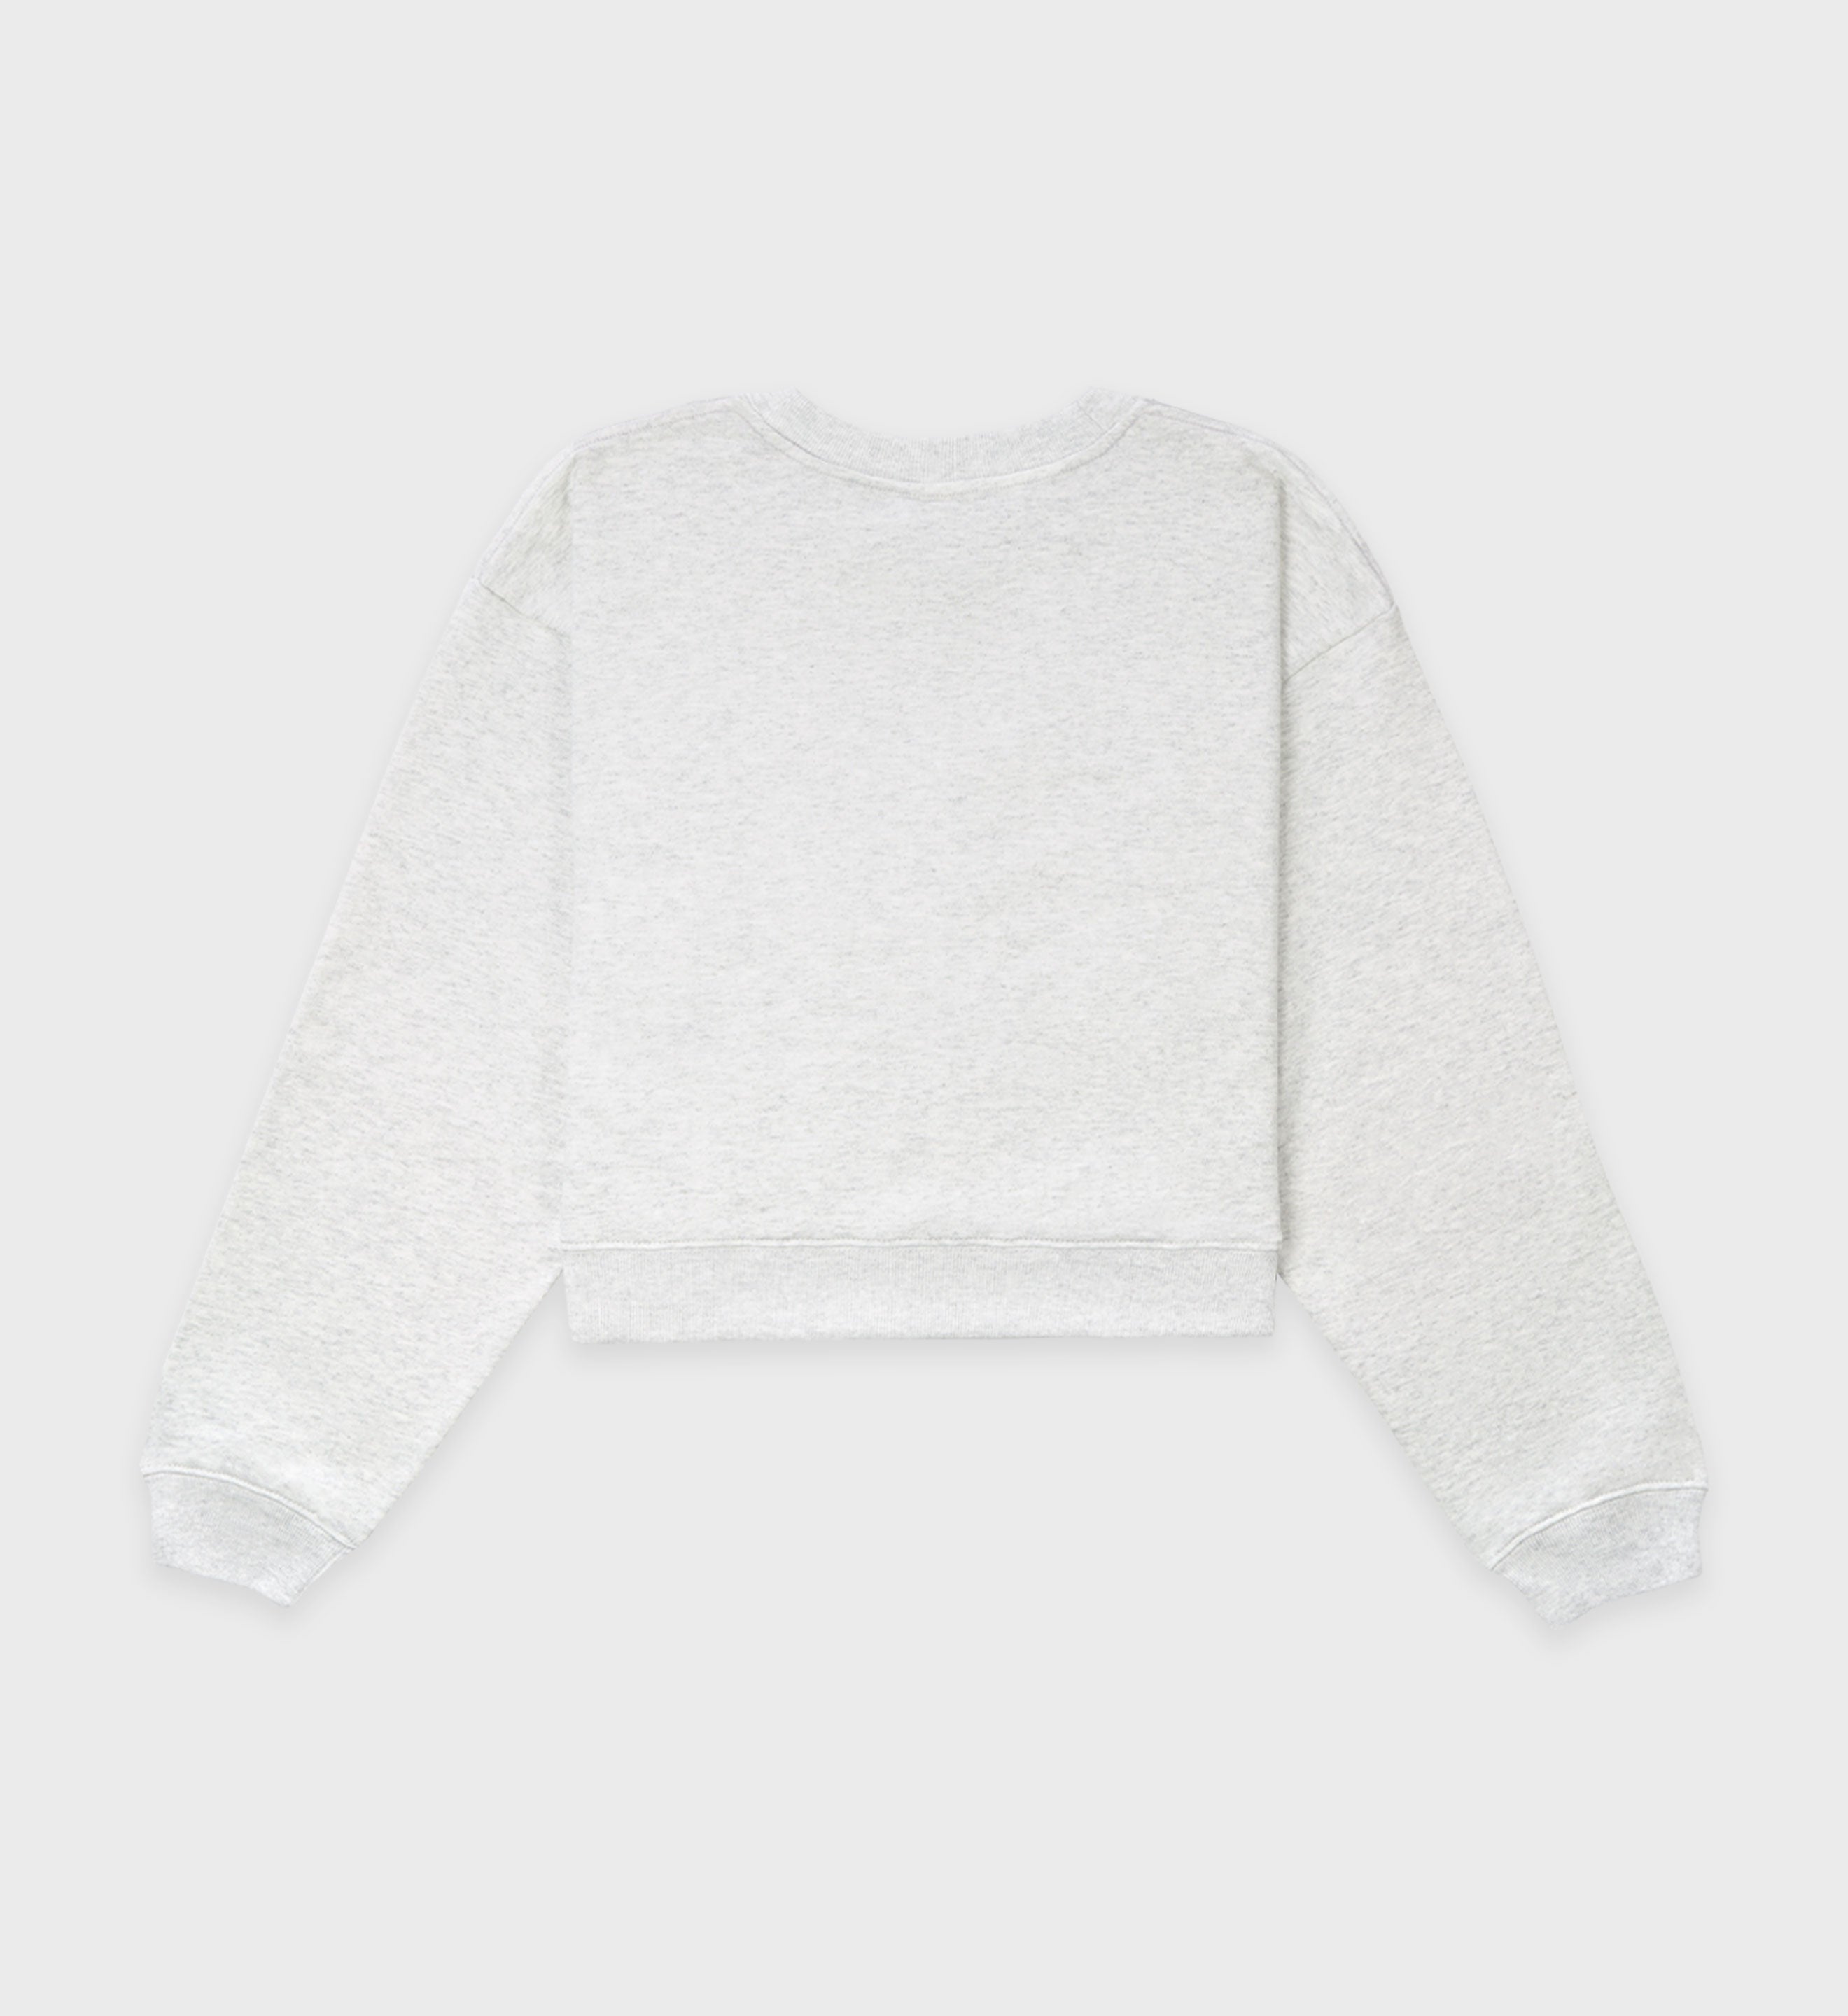 Sweatshirts – Sporty & Rich